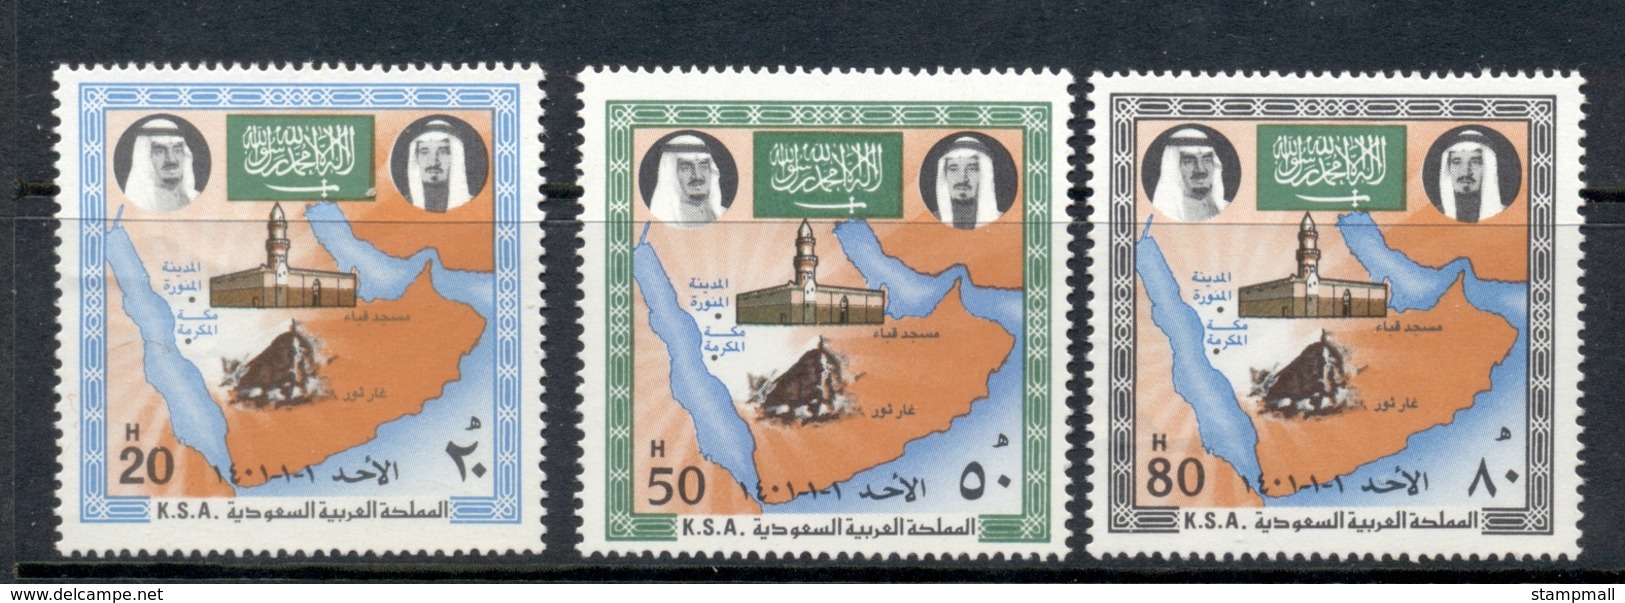 Saudi Arabia 1981 Heyira 1500th Anniversary MUH - Saudi Arabia